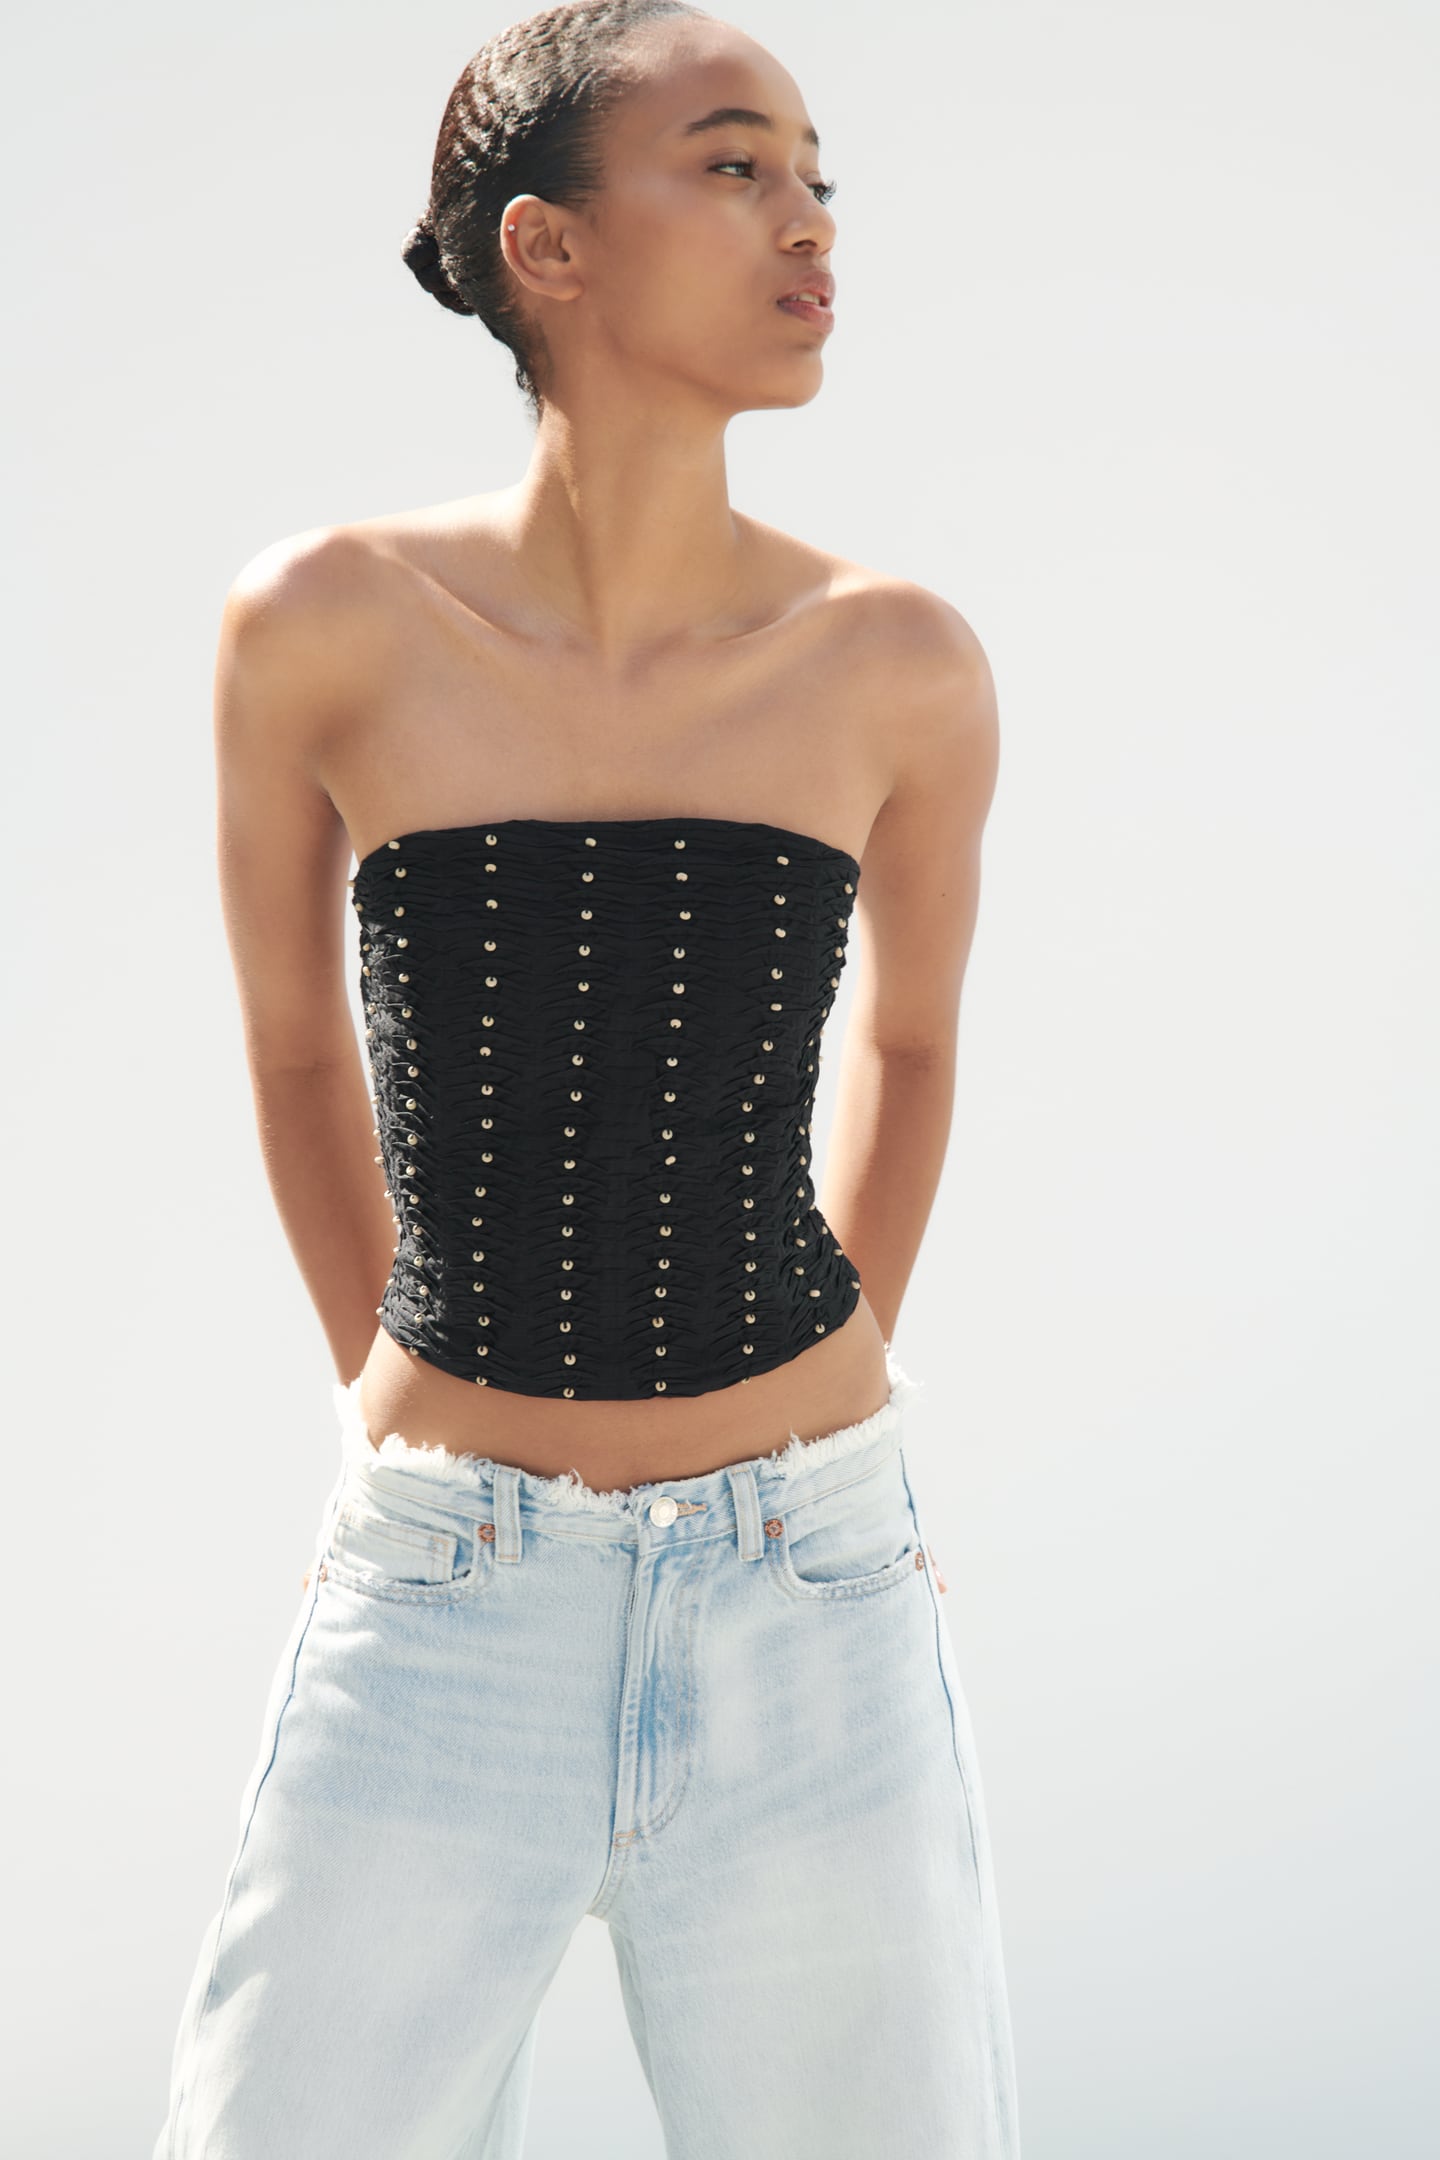 Zara + Beaded Strapless Top